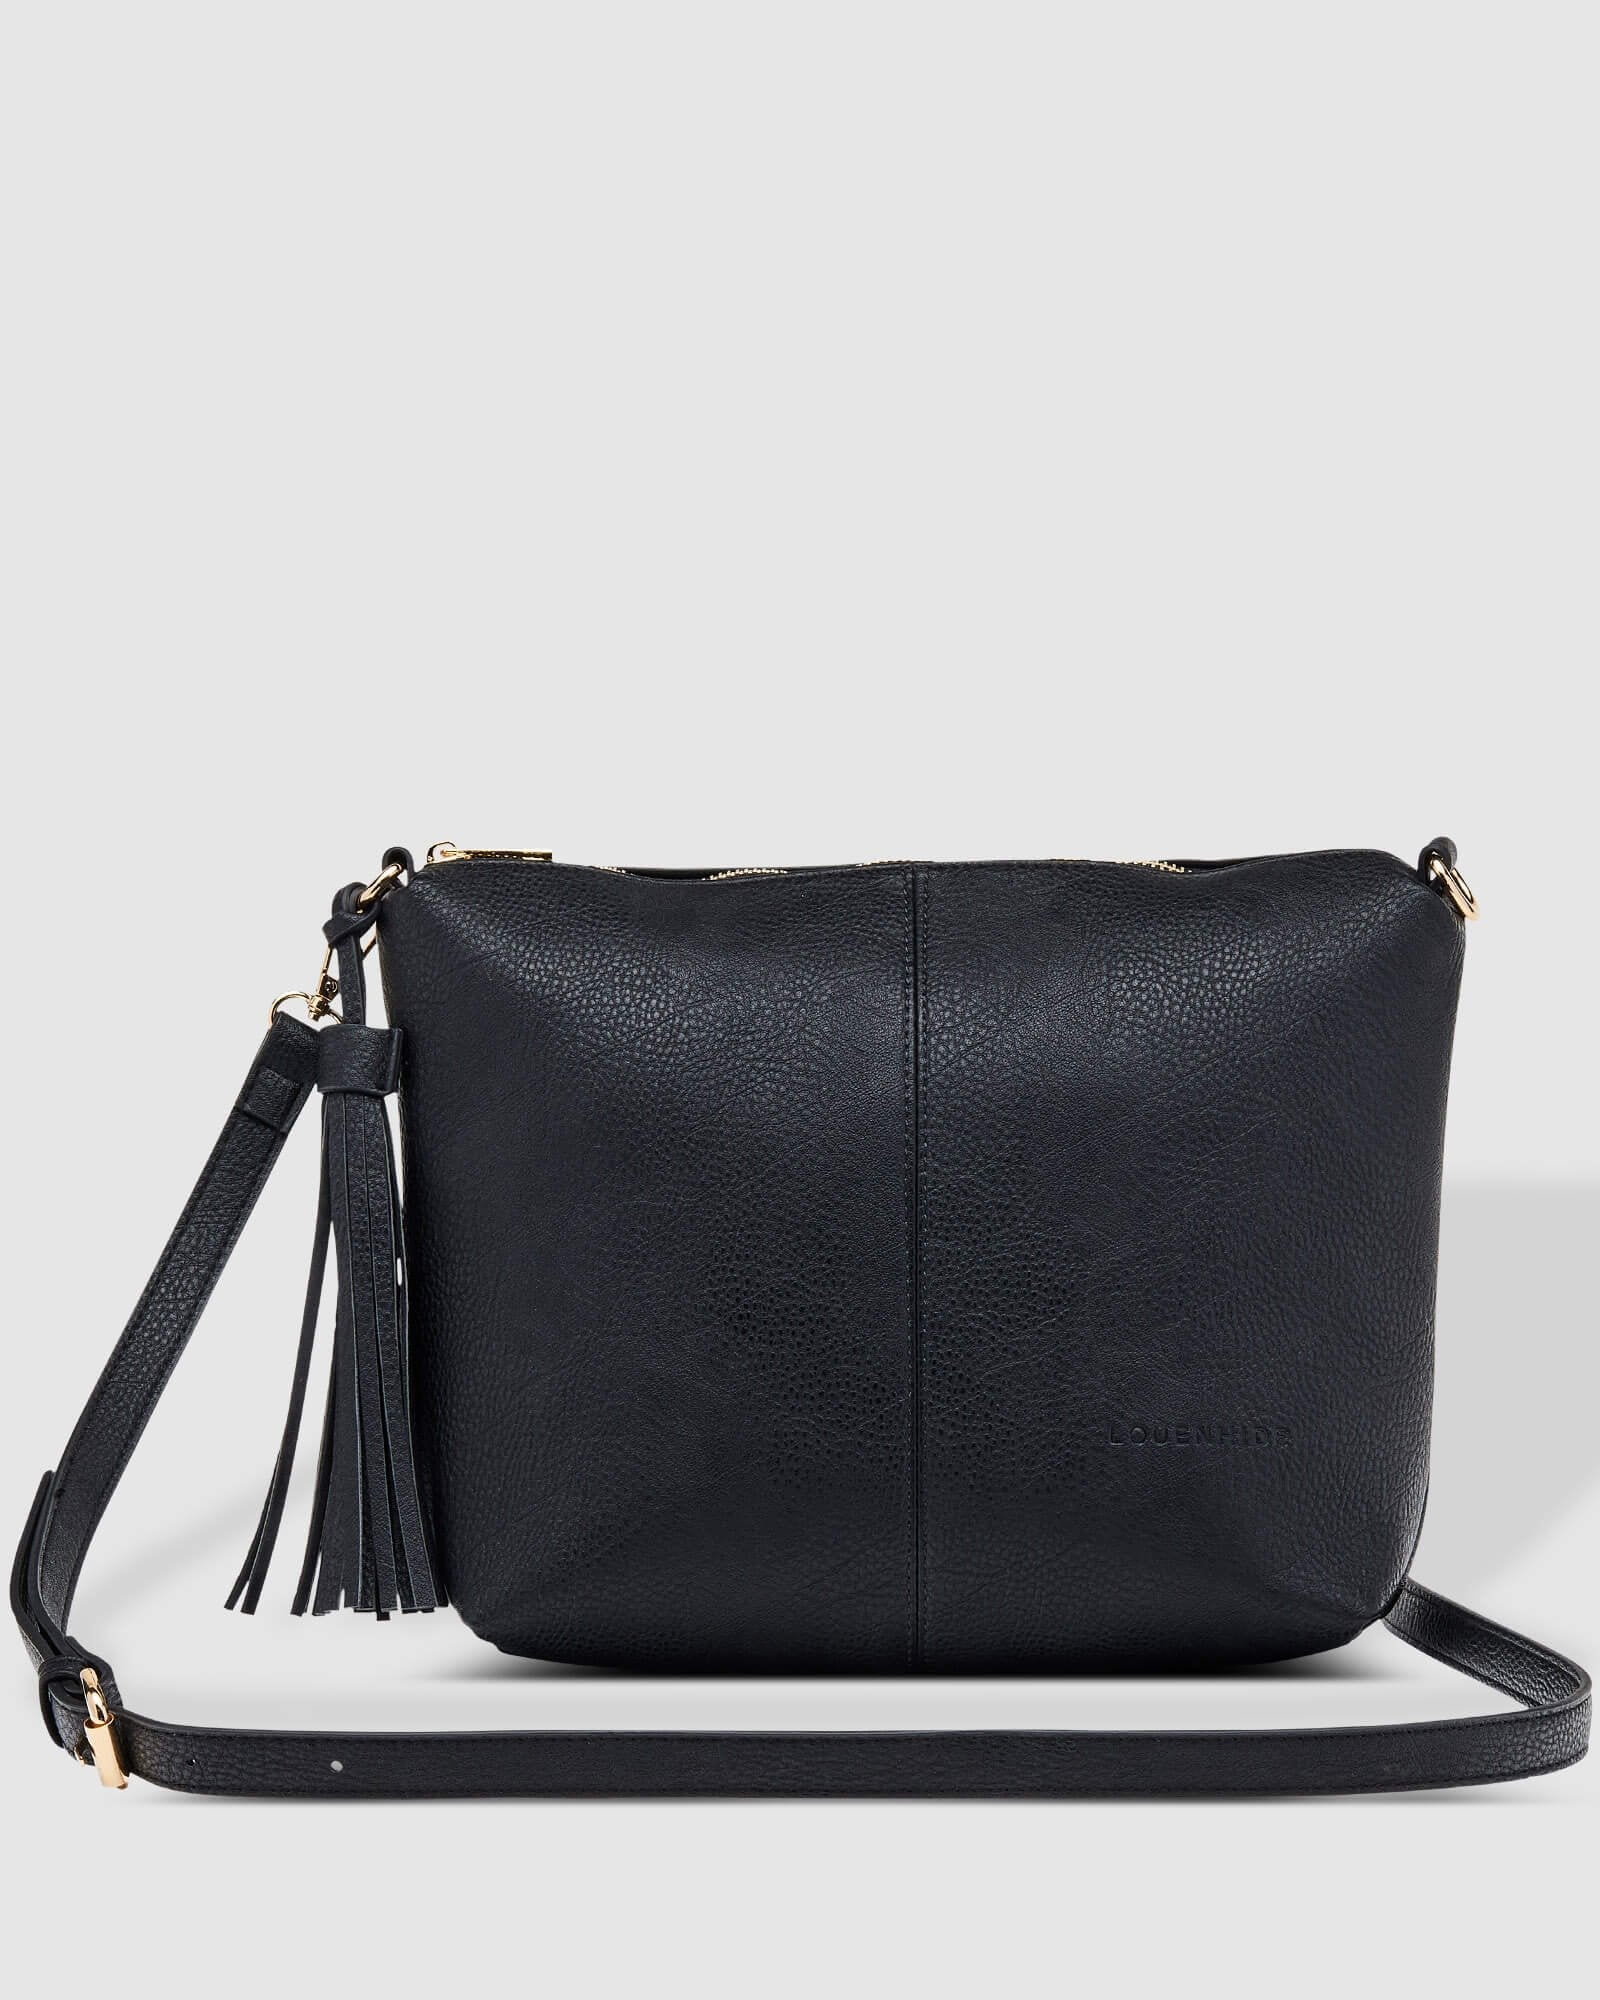 Louenhide Daisy Crossbody Bag - Black Accessories - Other Accessories - Handbags & Wallets by Louenhide | Grace the Boutique